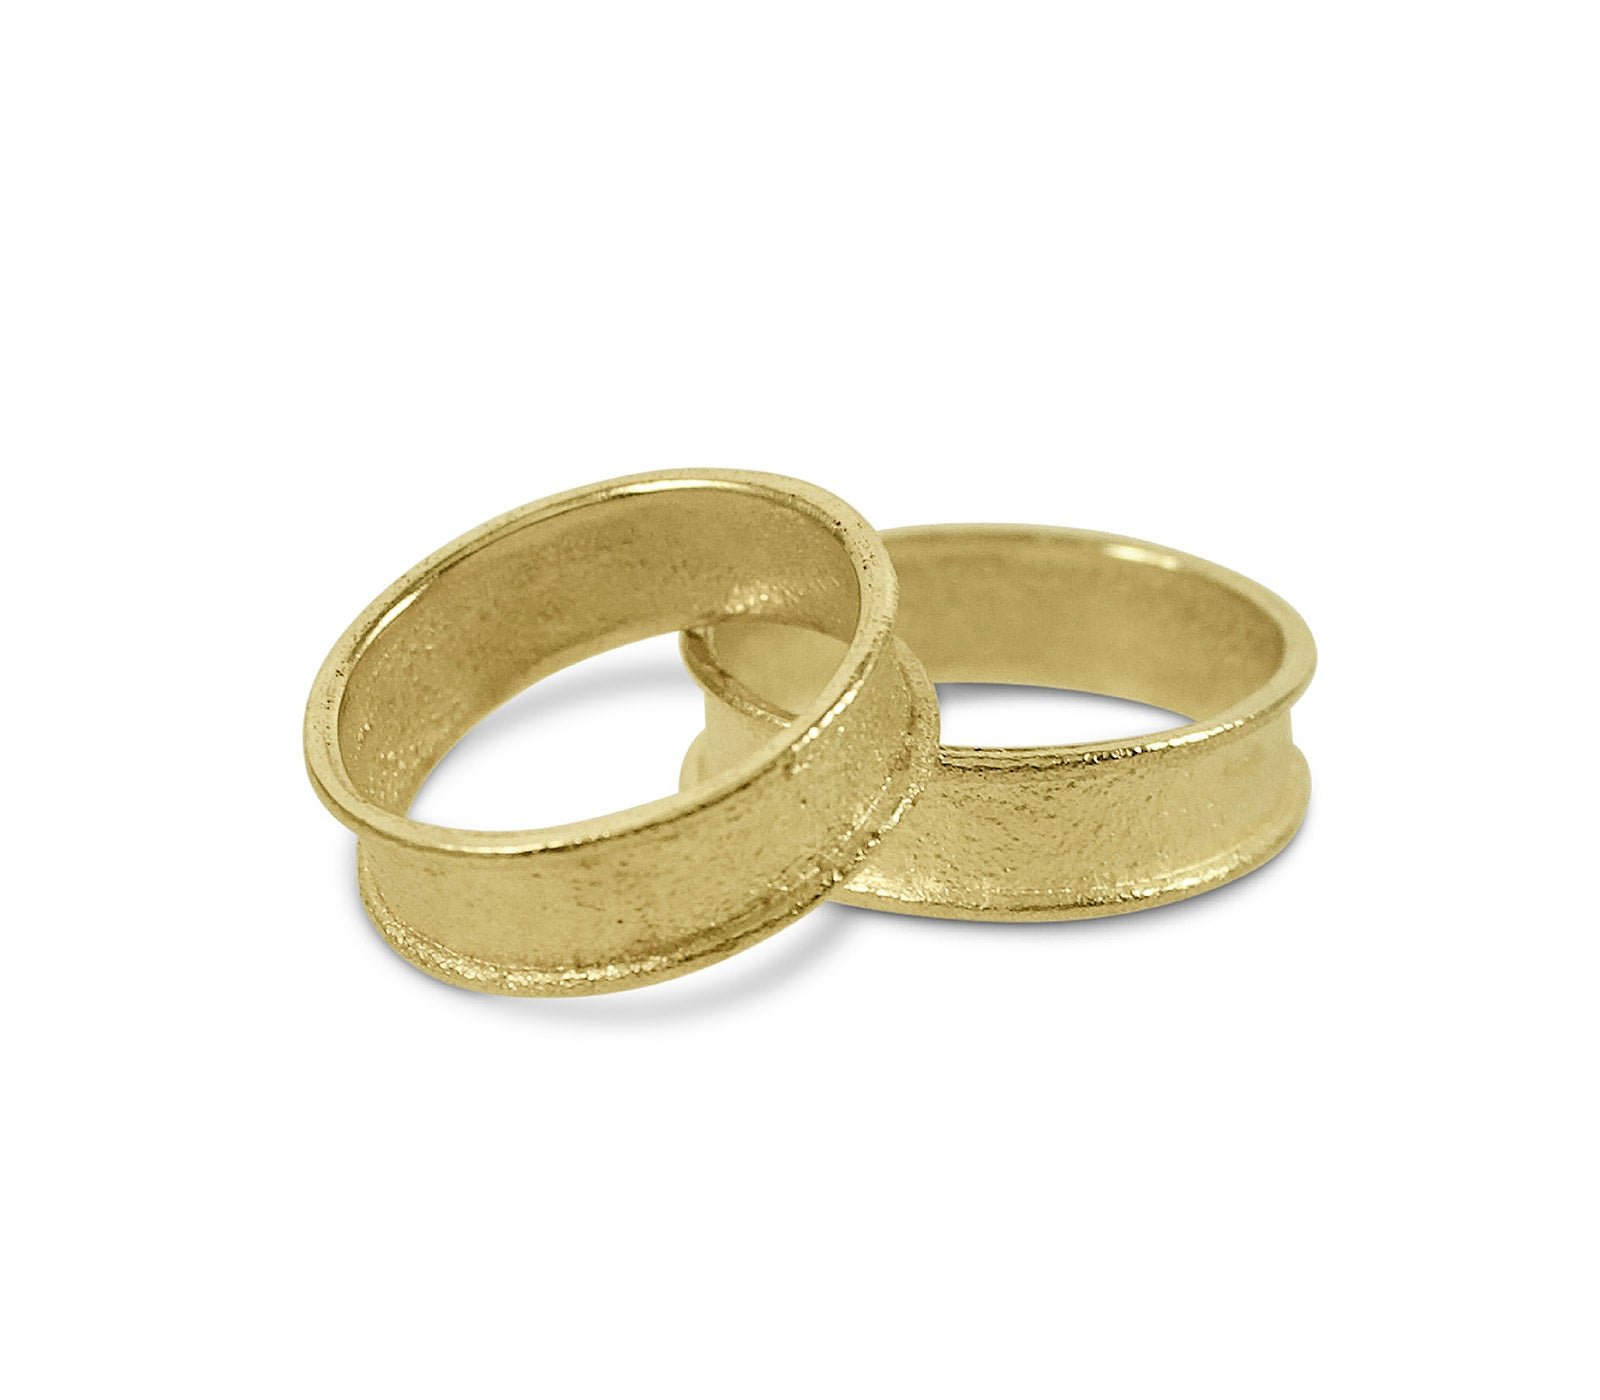 Flat band wedding rings